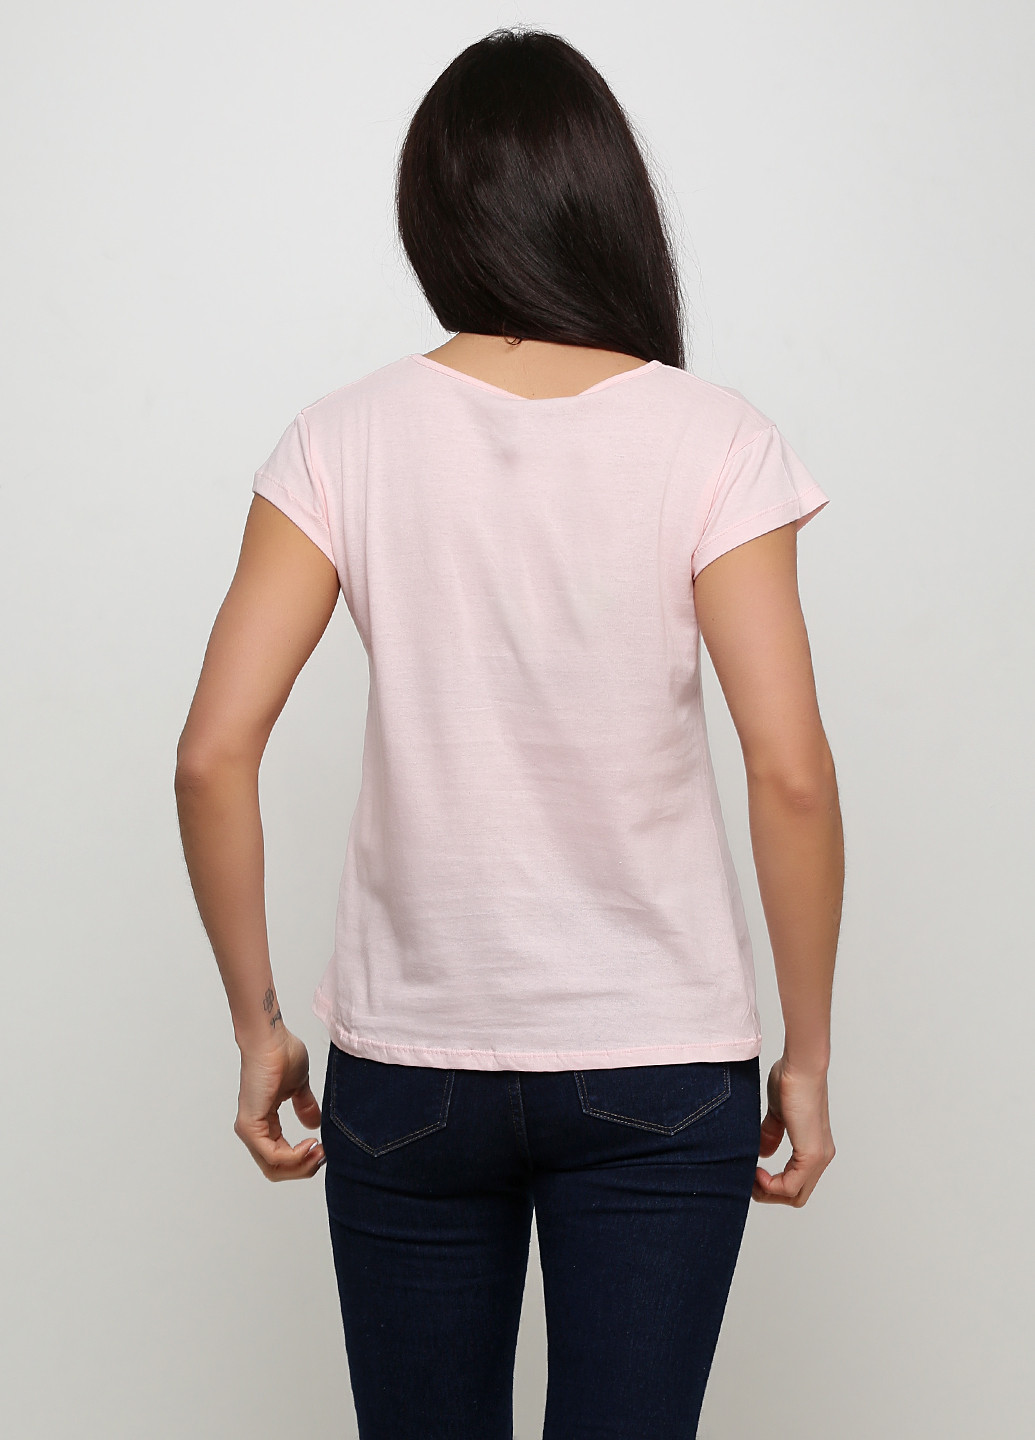 Светло-розовая летняя футболка Has Life